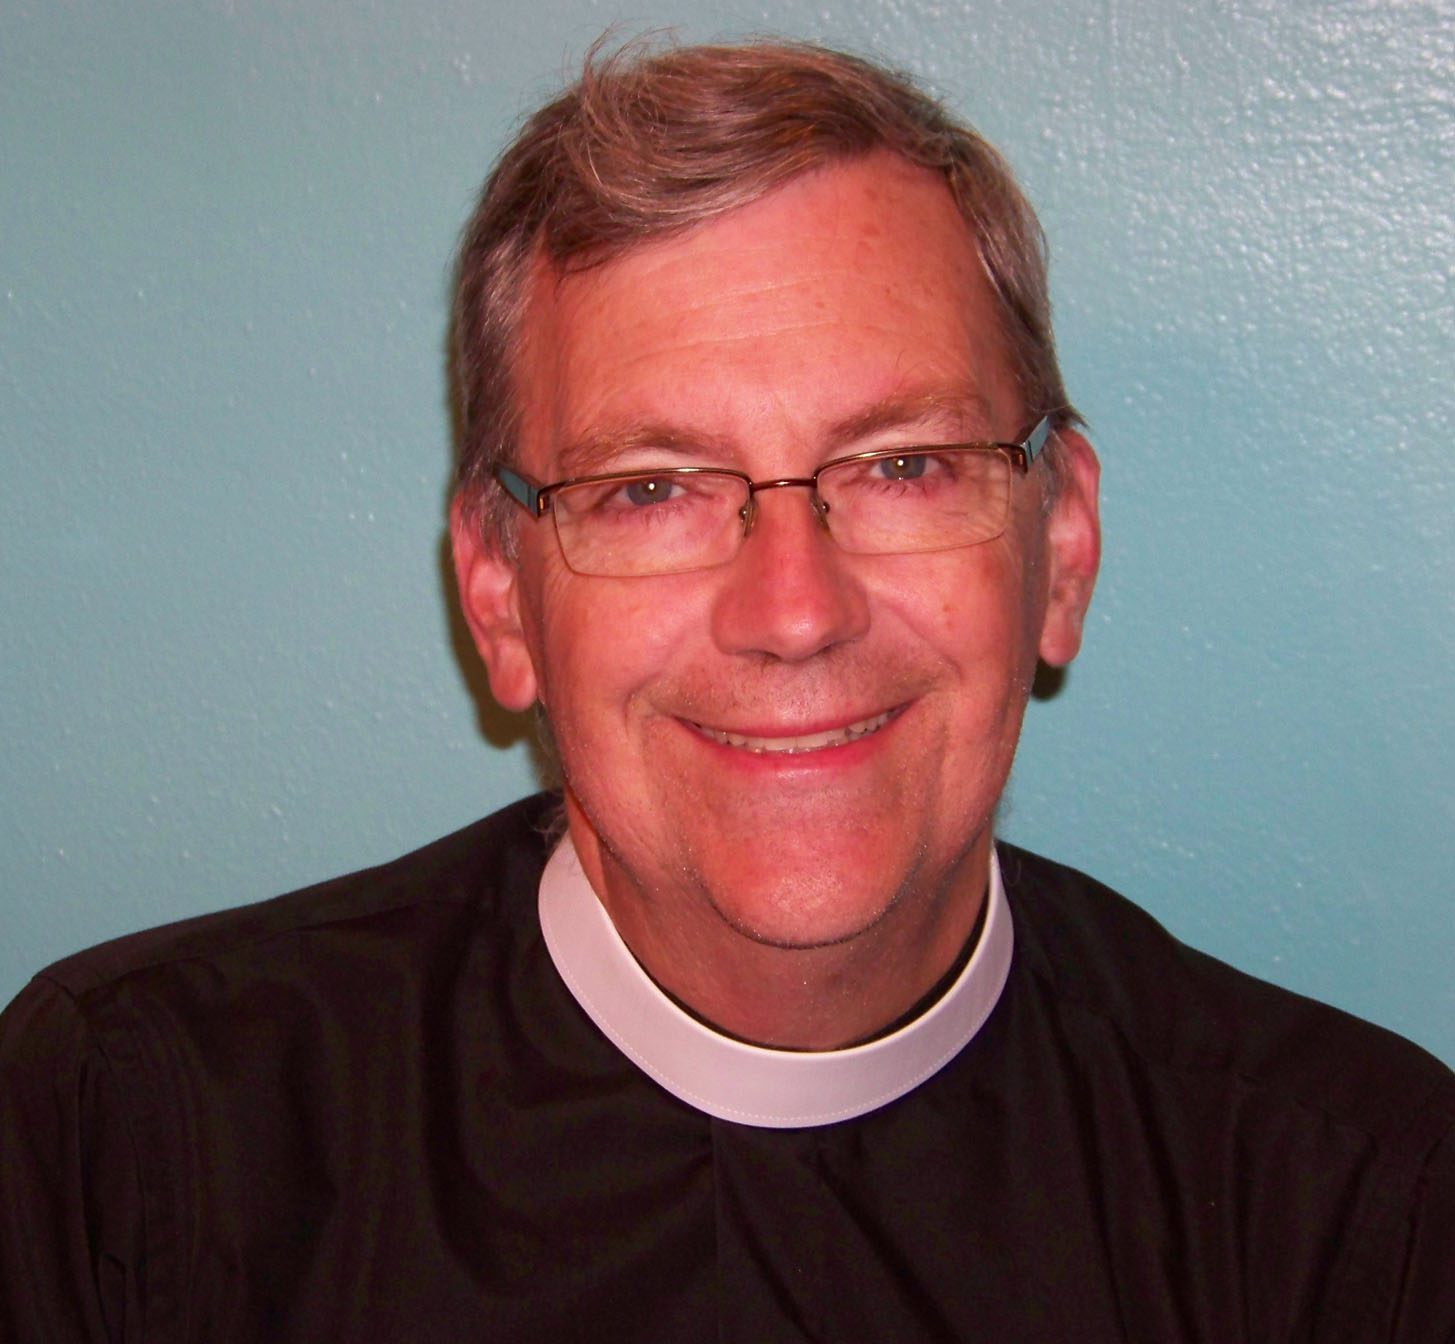 The Rev. Dr. Joel Grigg